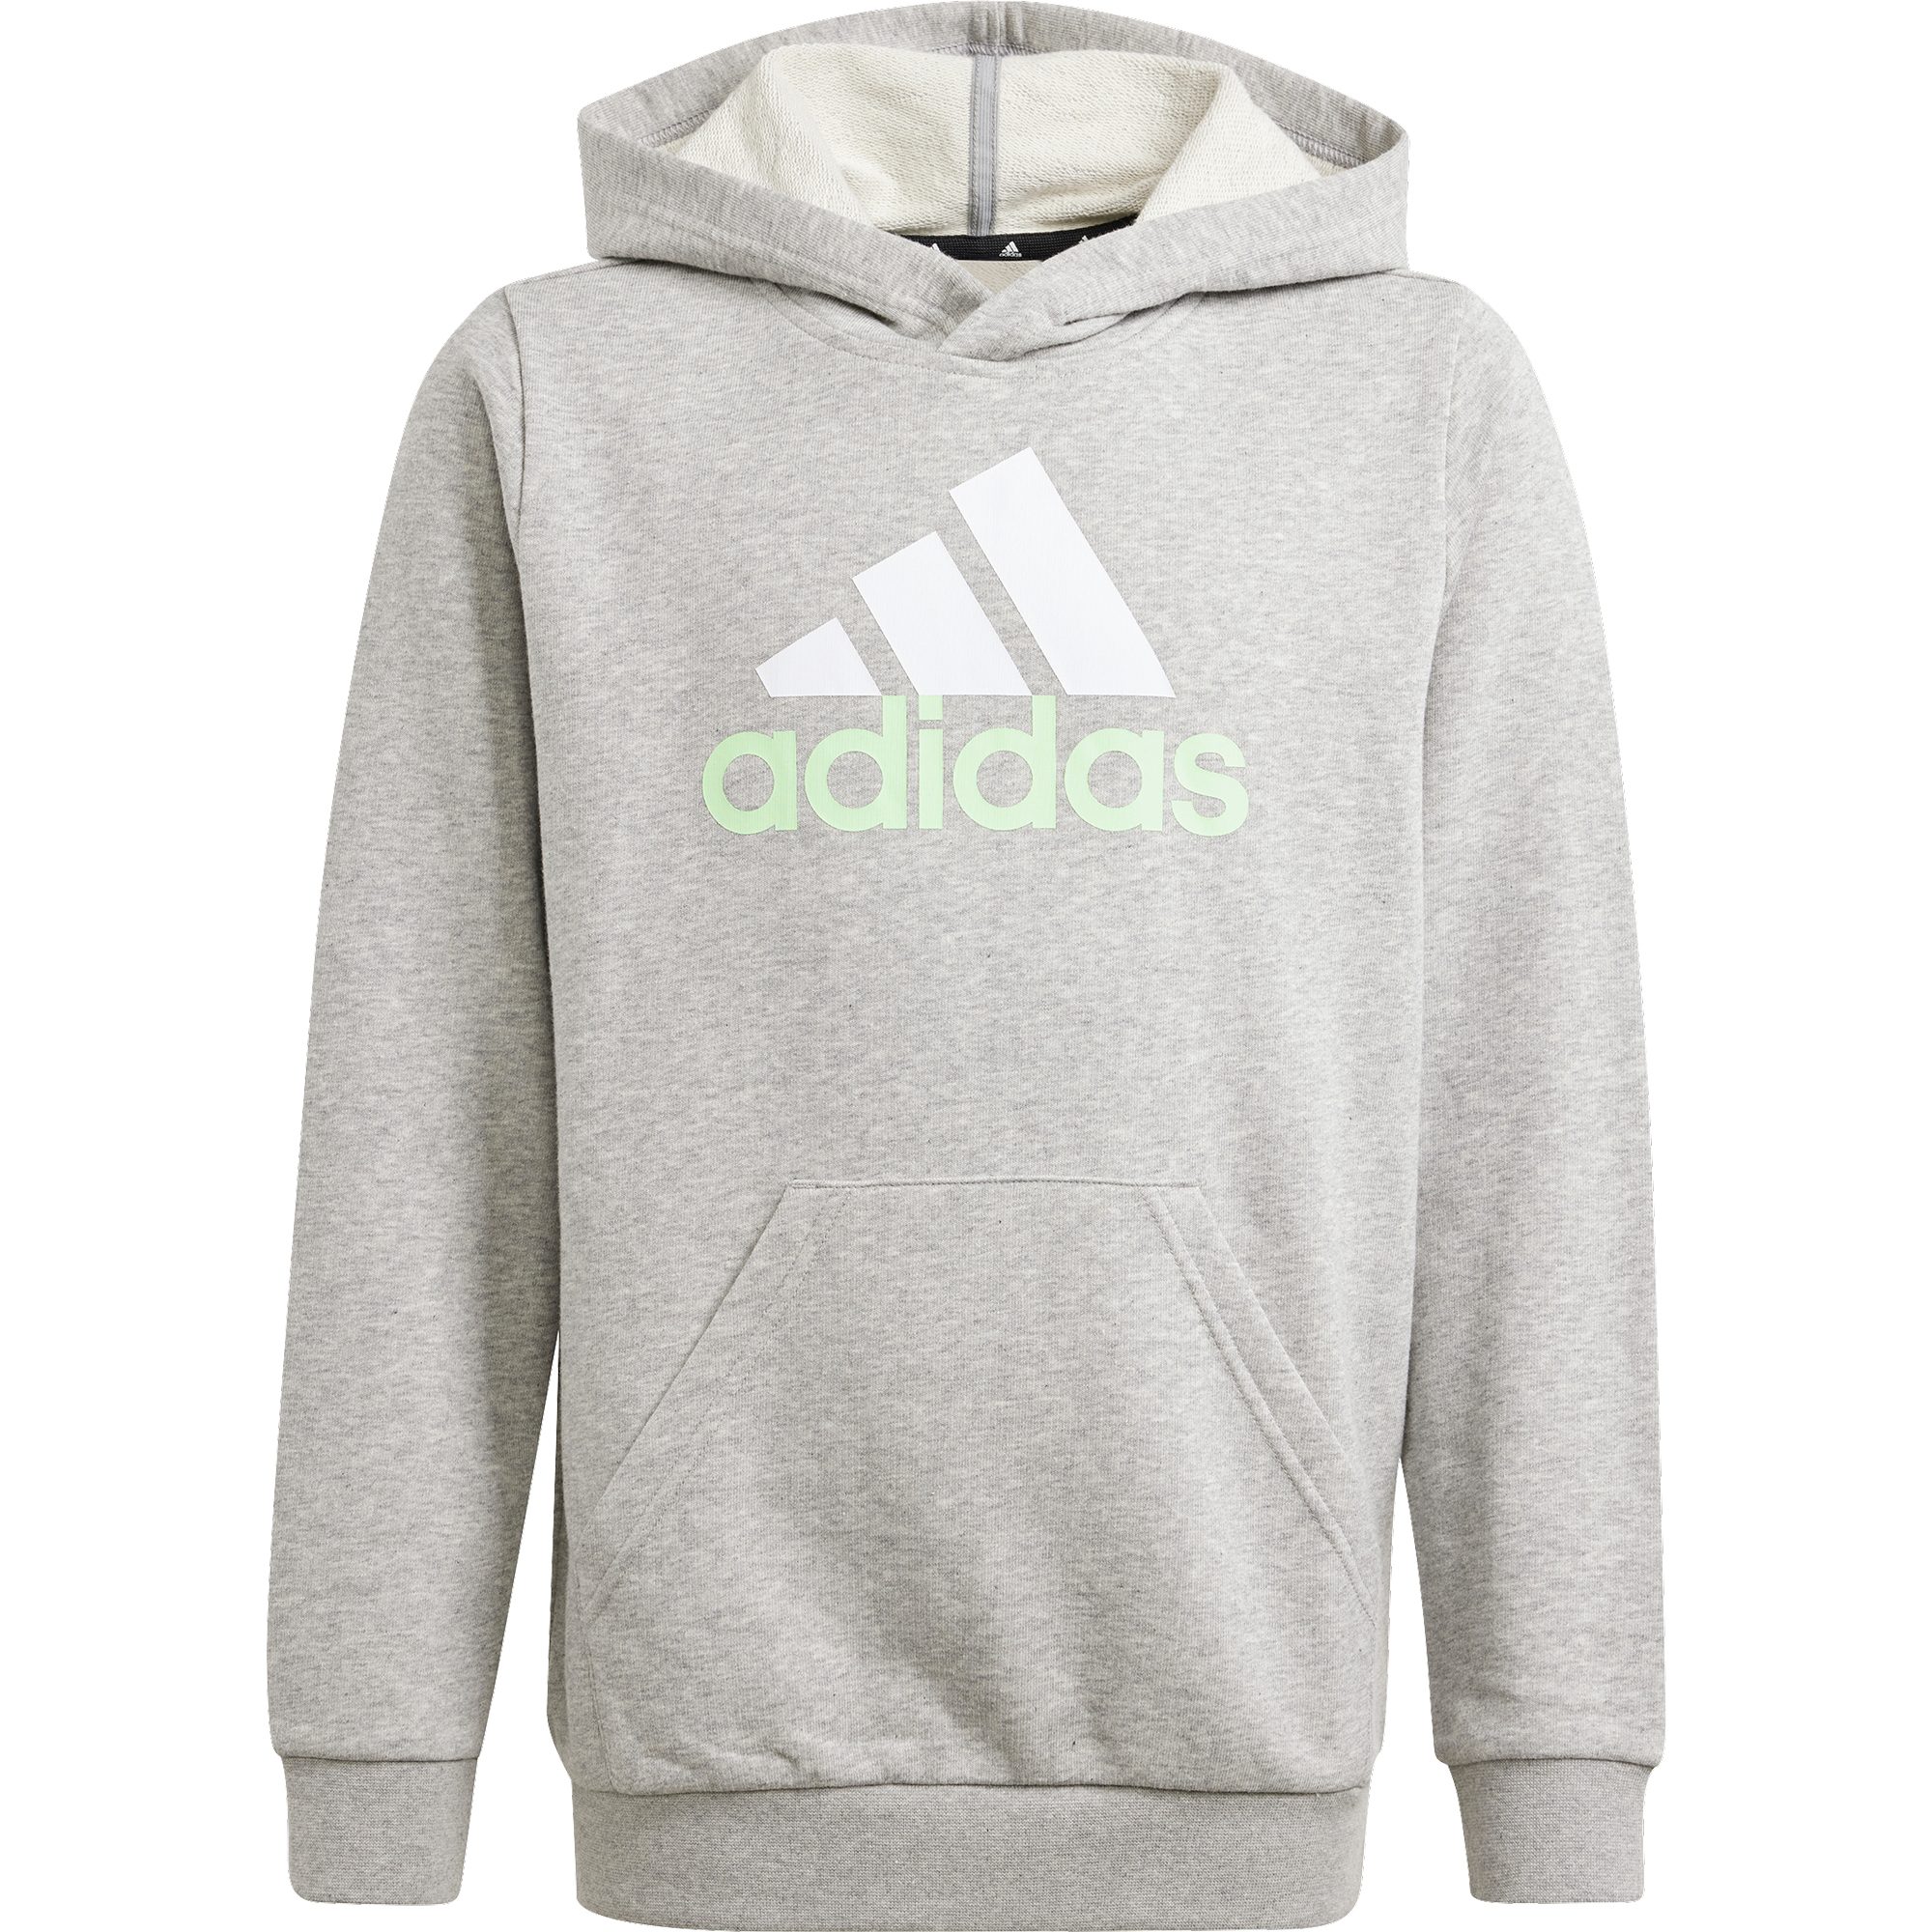 adidas - Logo Hoodie Shop Cotton at Bittl Kids heather Essentials Big grey Sport Two-Colored medium